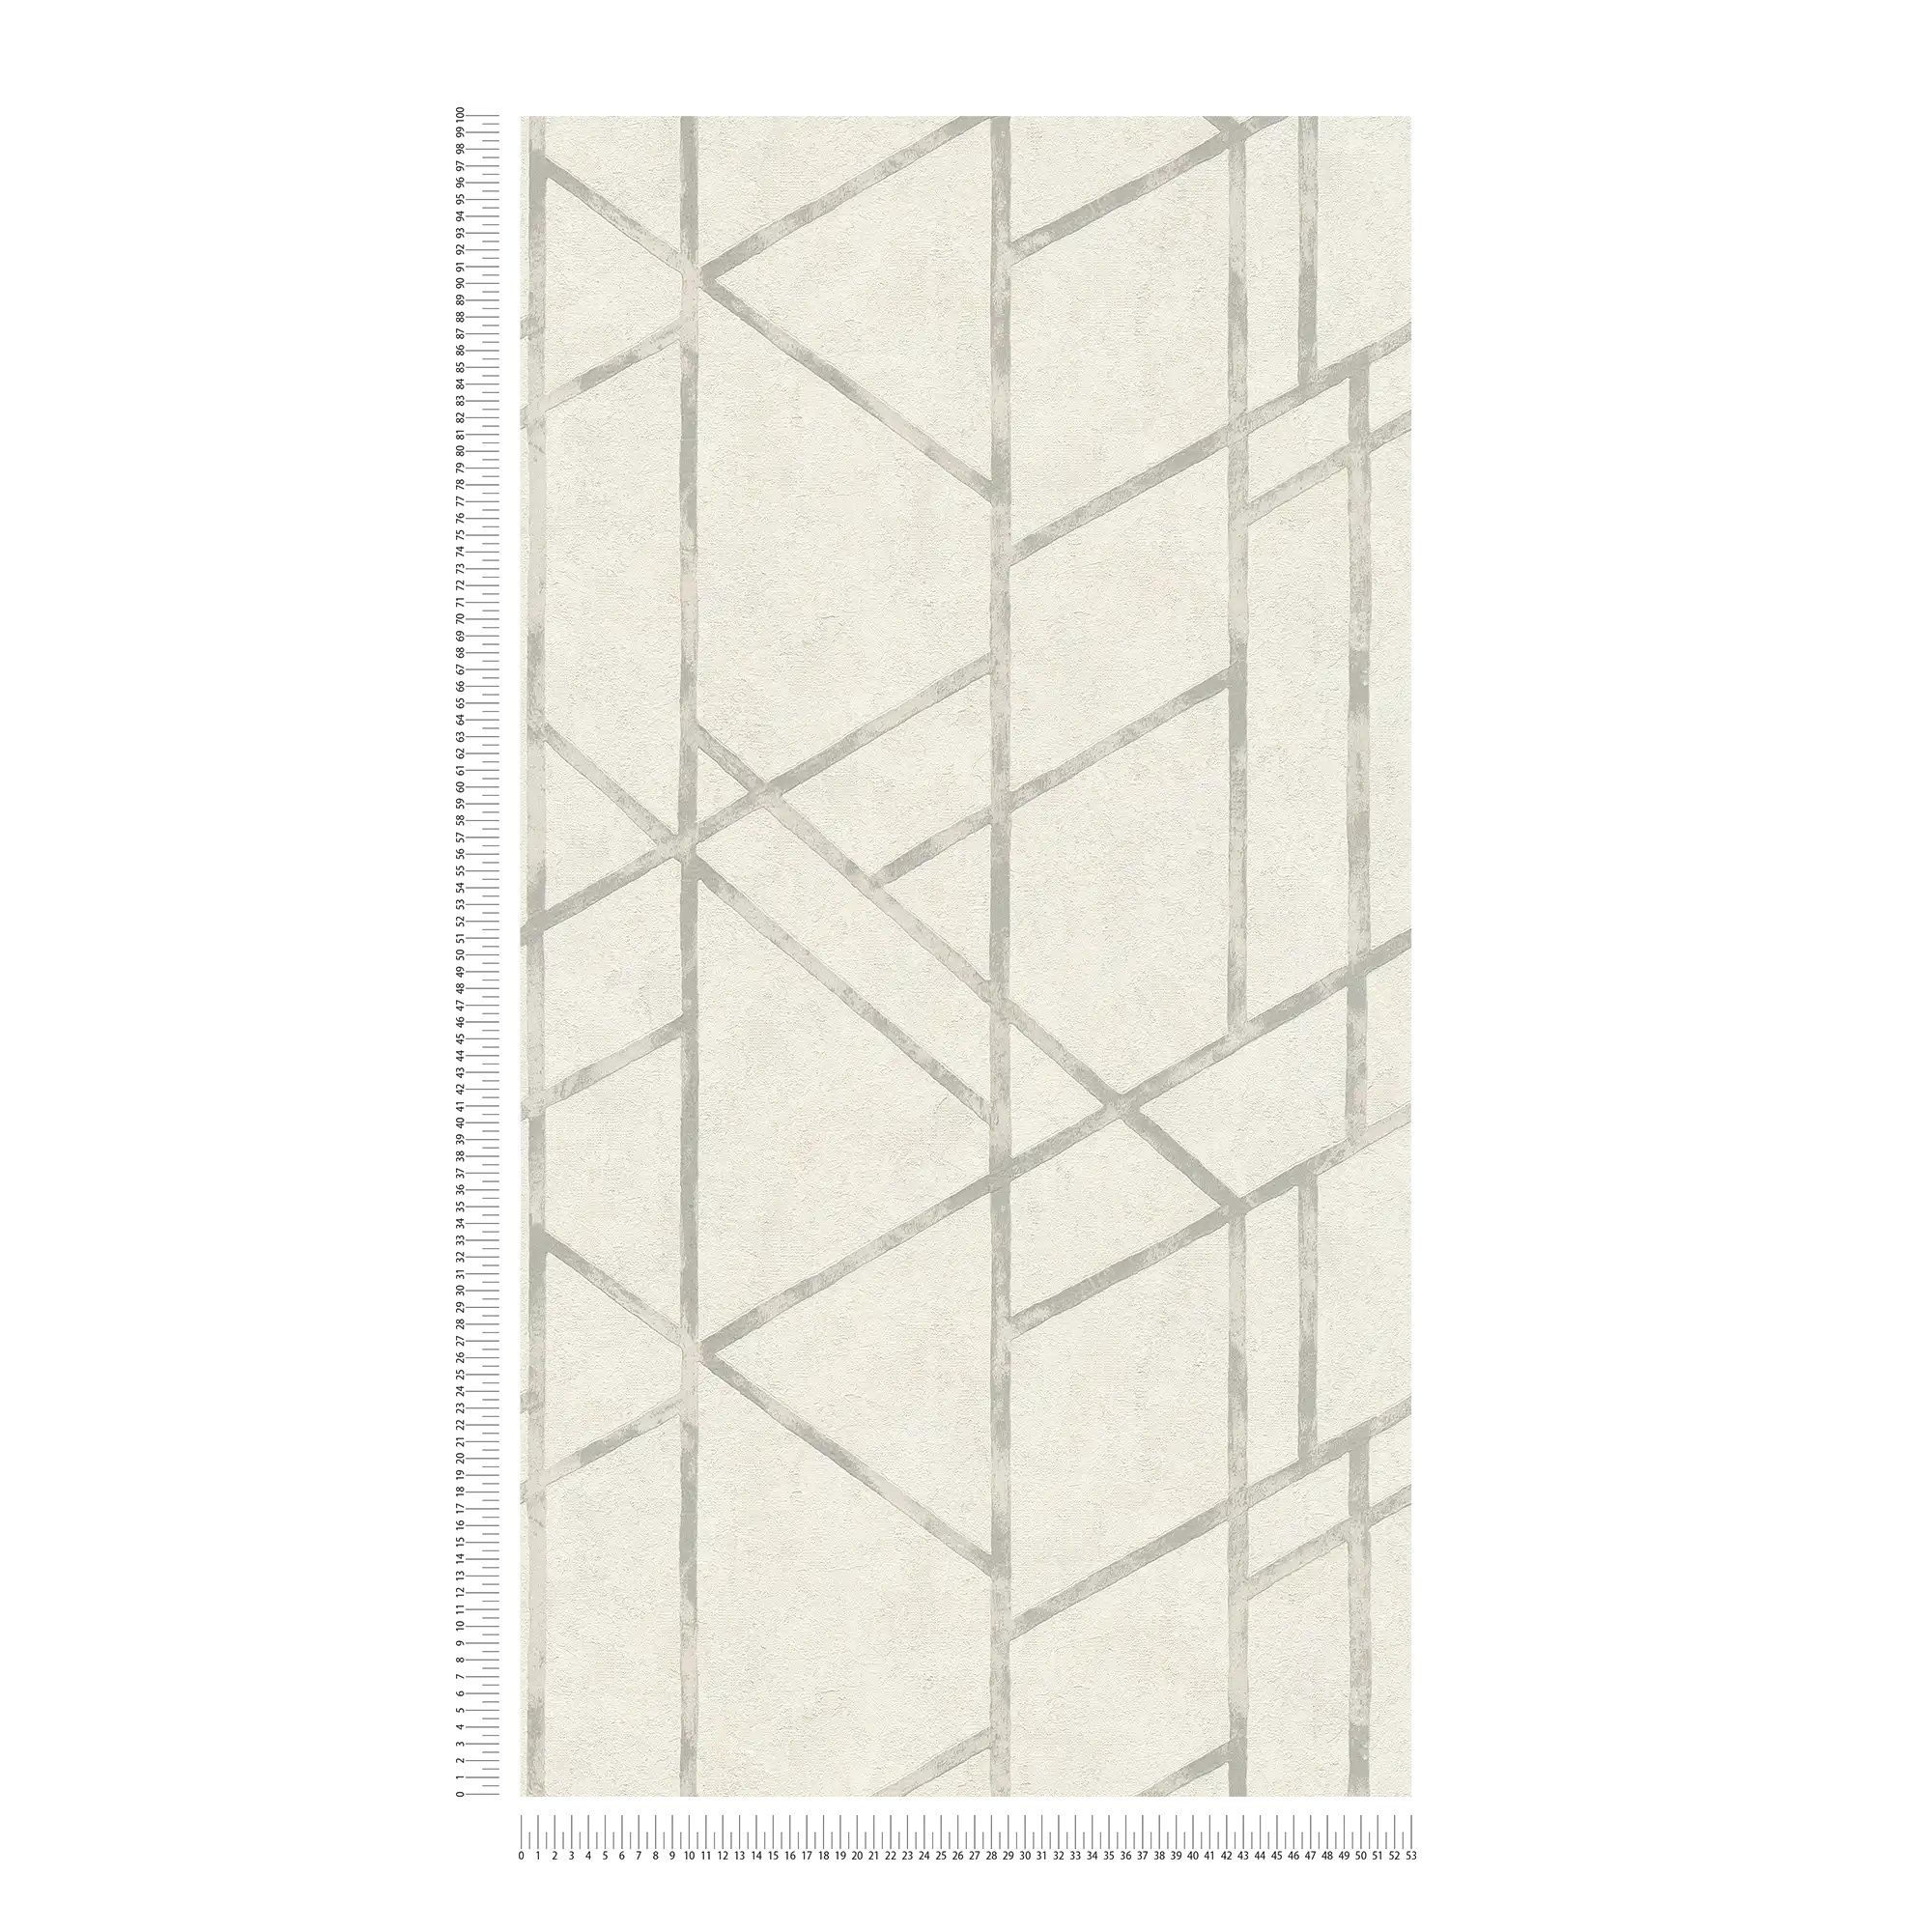             Concrete wallpaper with silver graphic pattern - silver, white
        